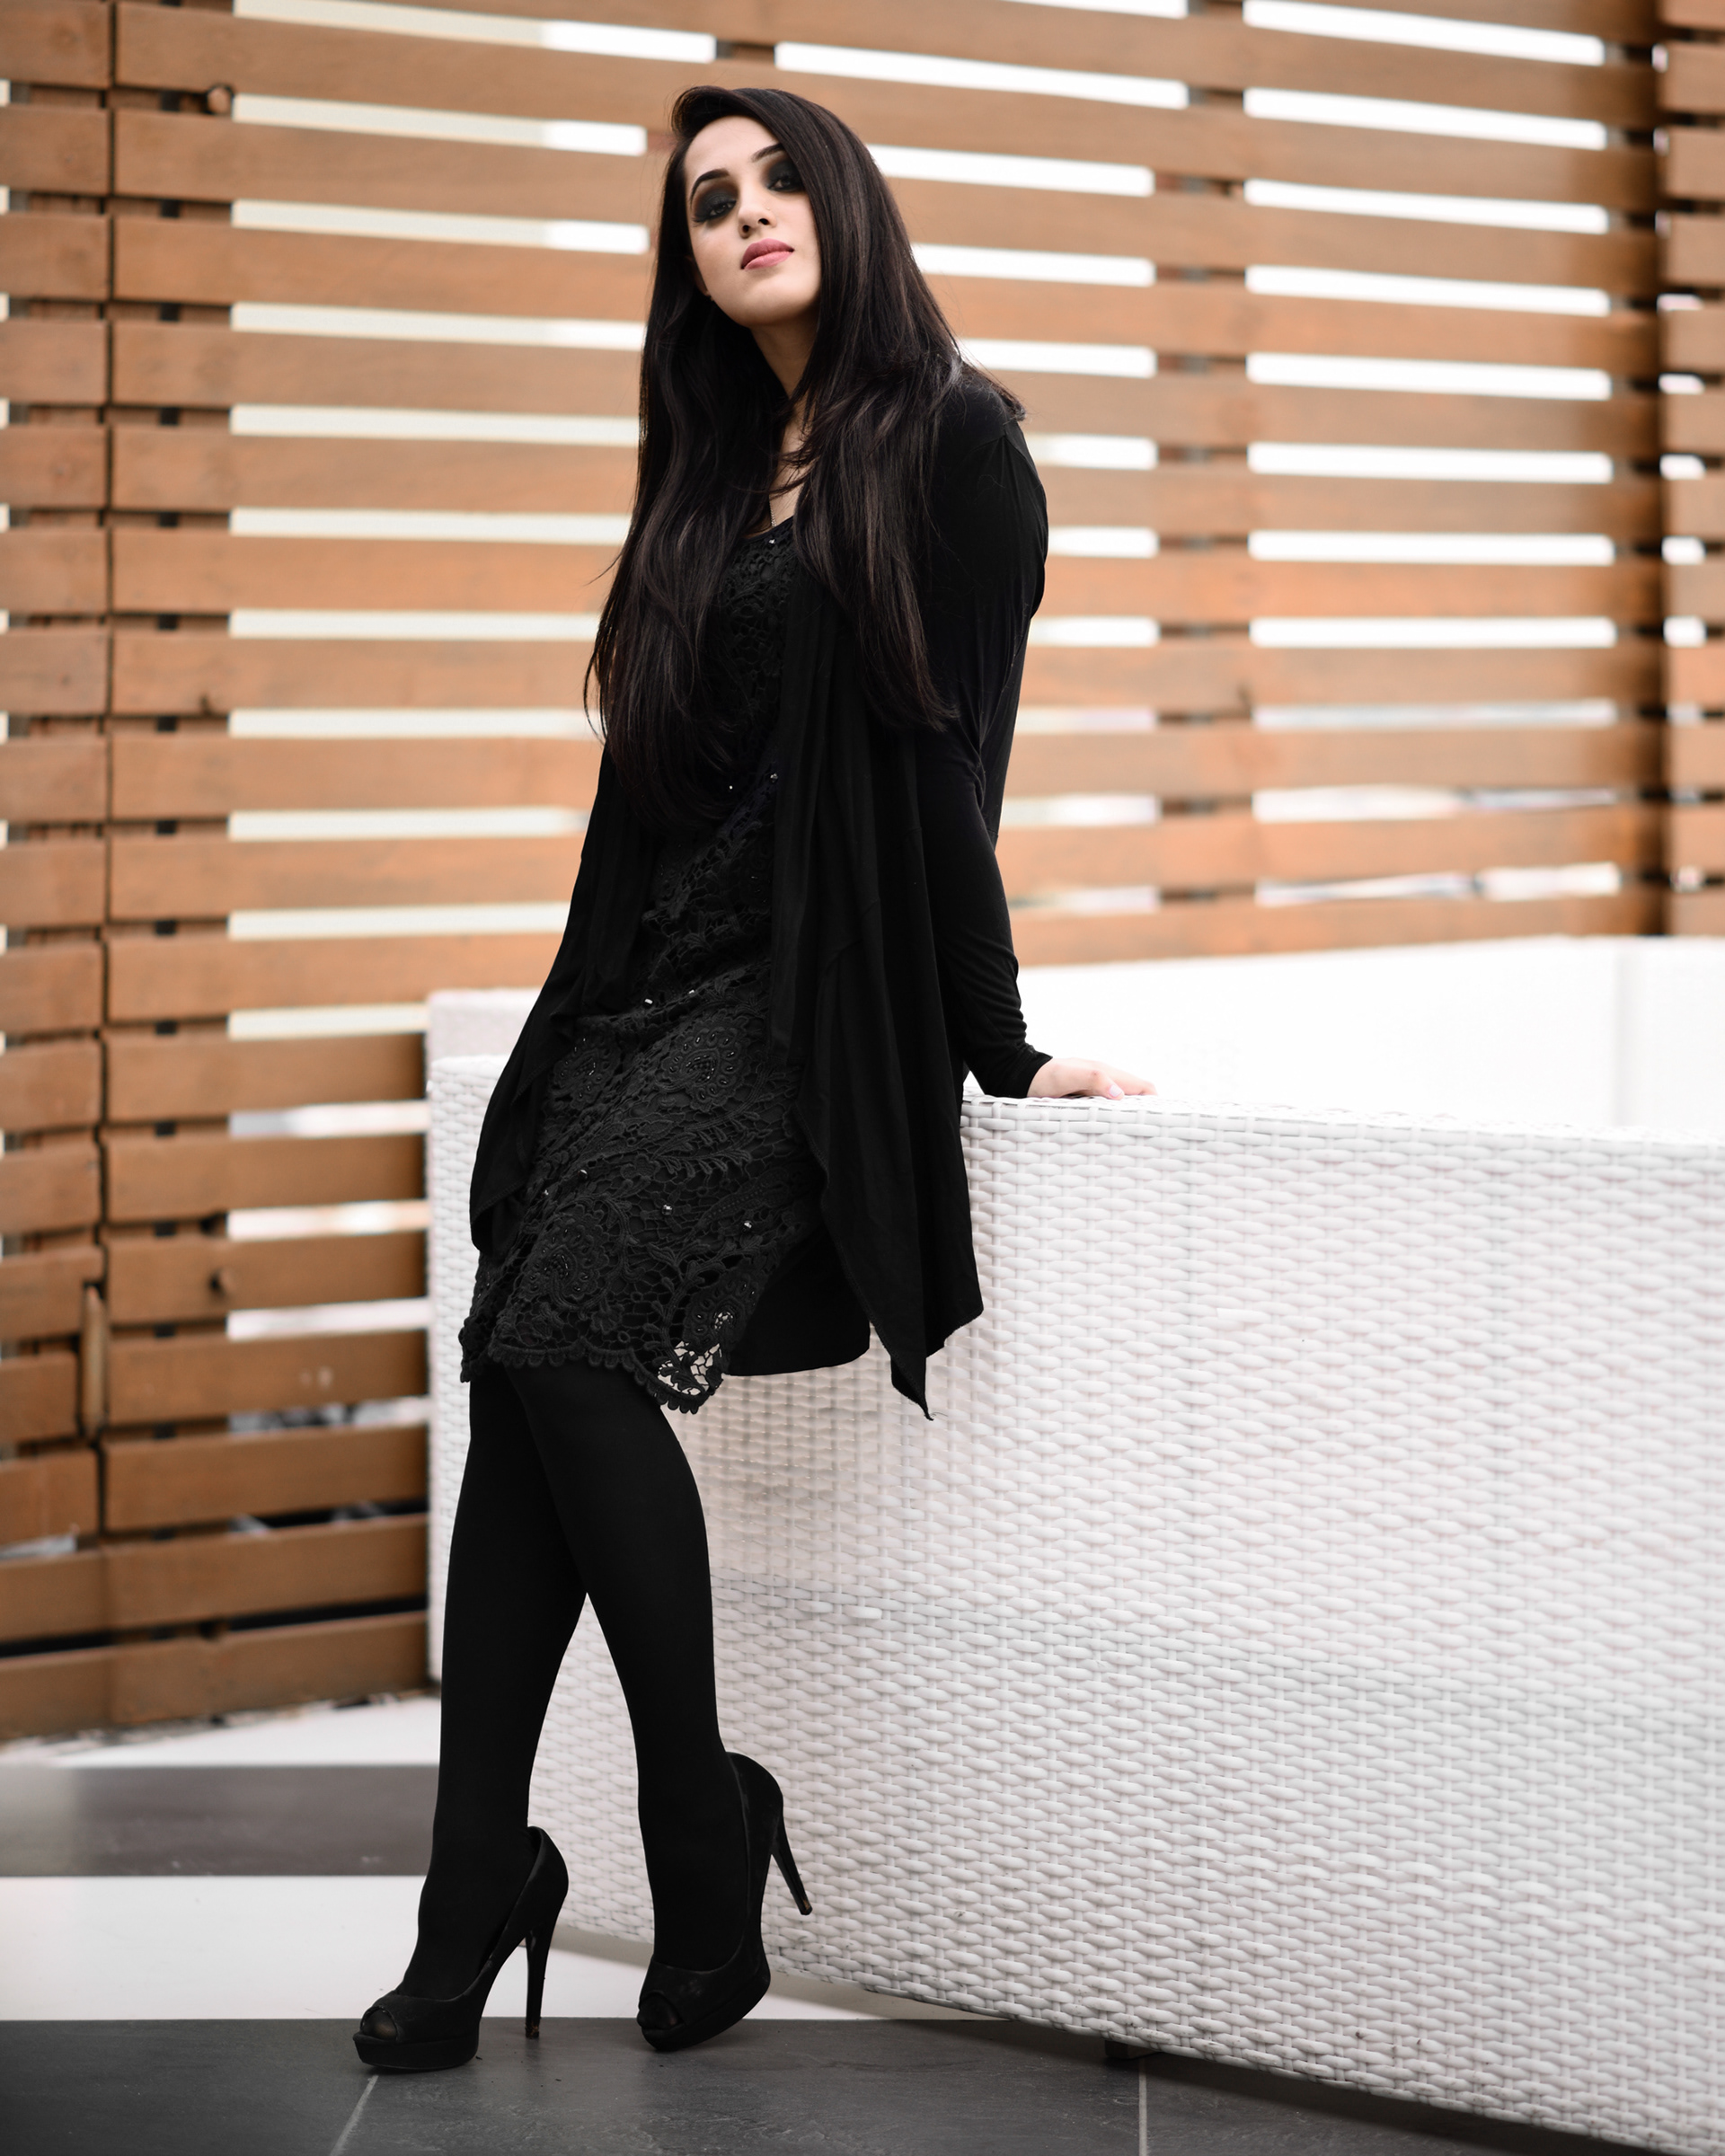 Irfan Intekhab | Portrait & Fashion Photographer - Girl in Black